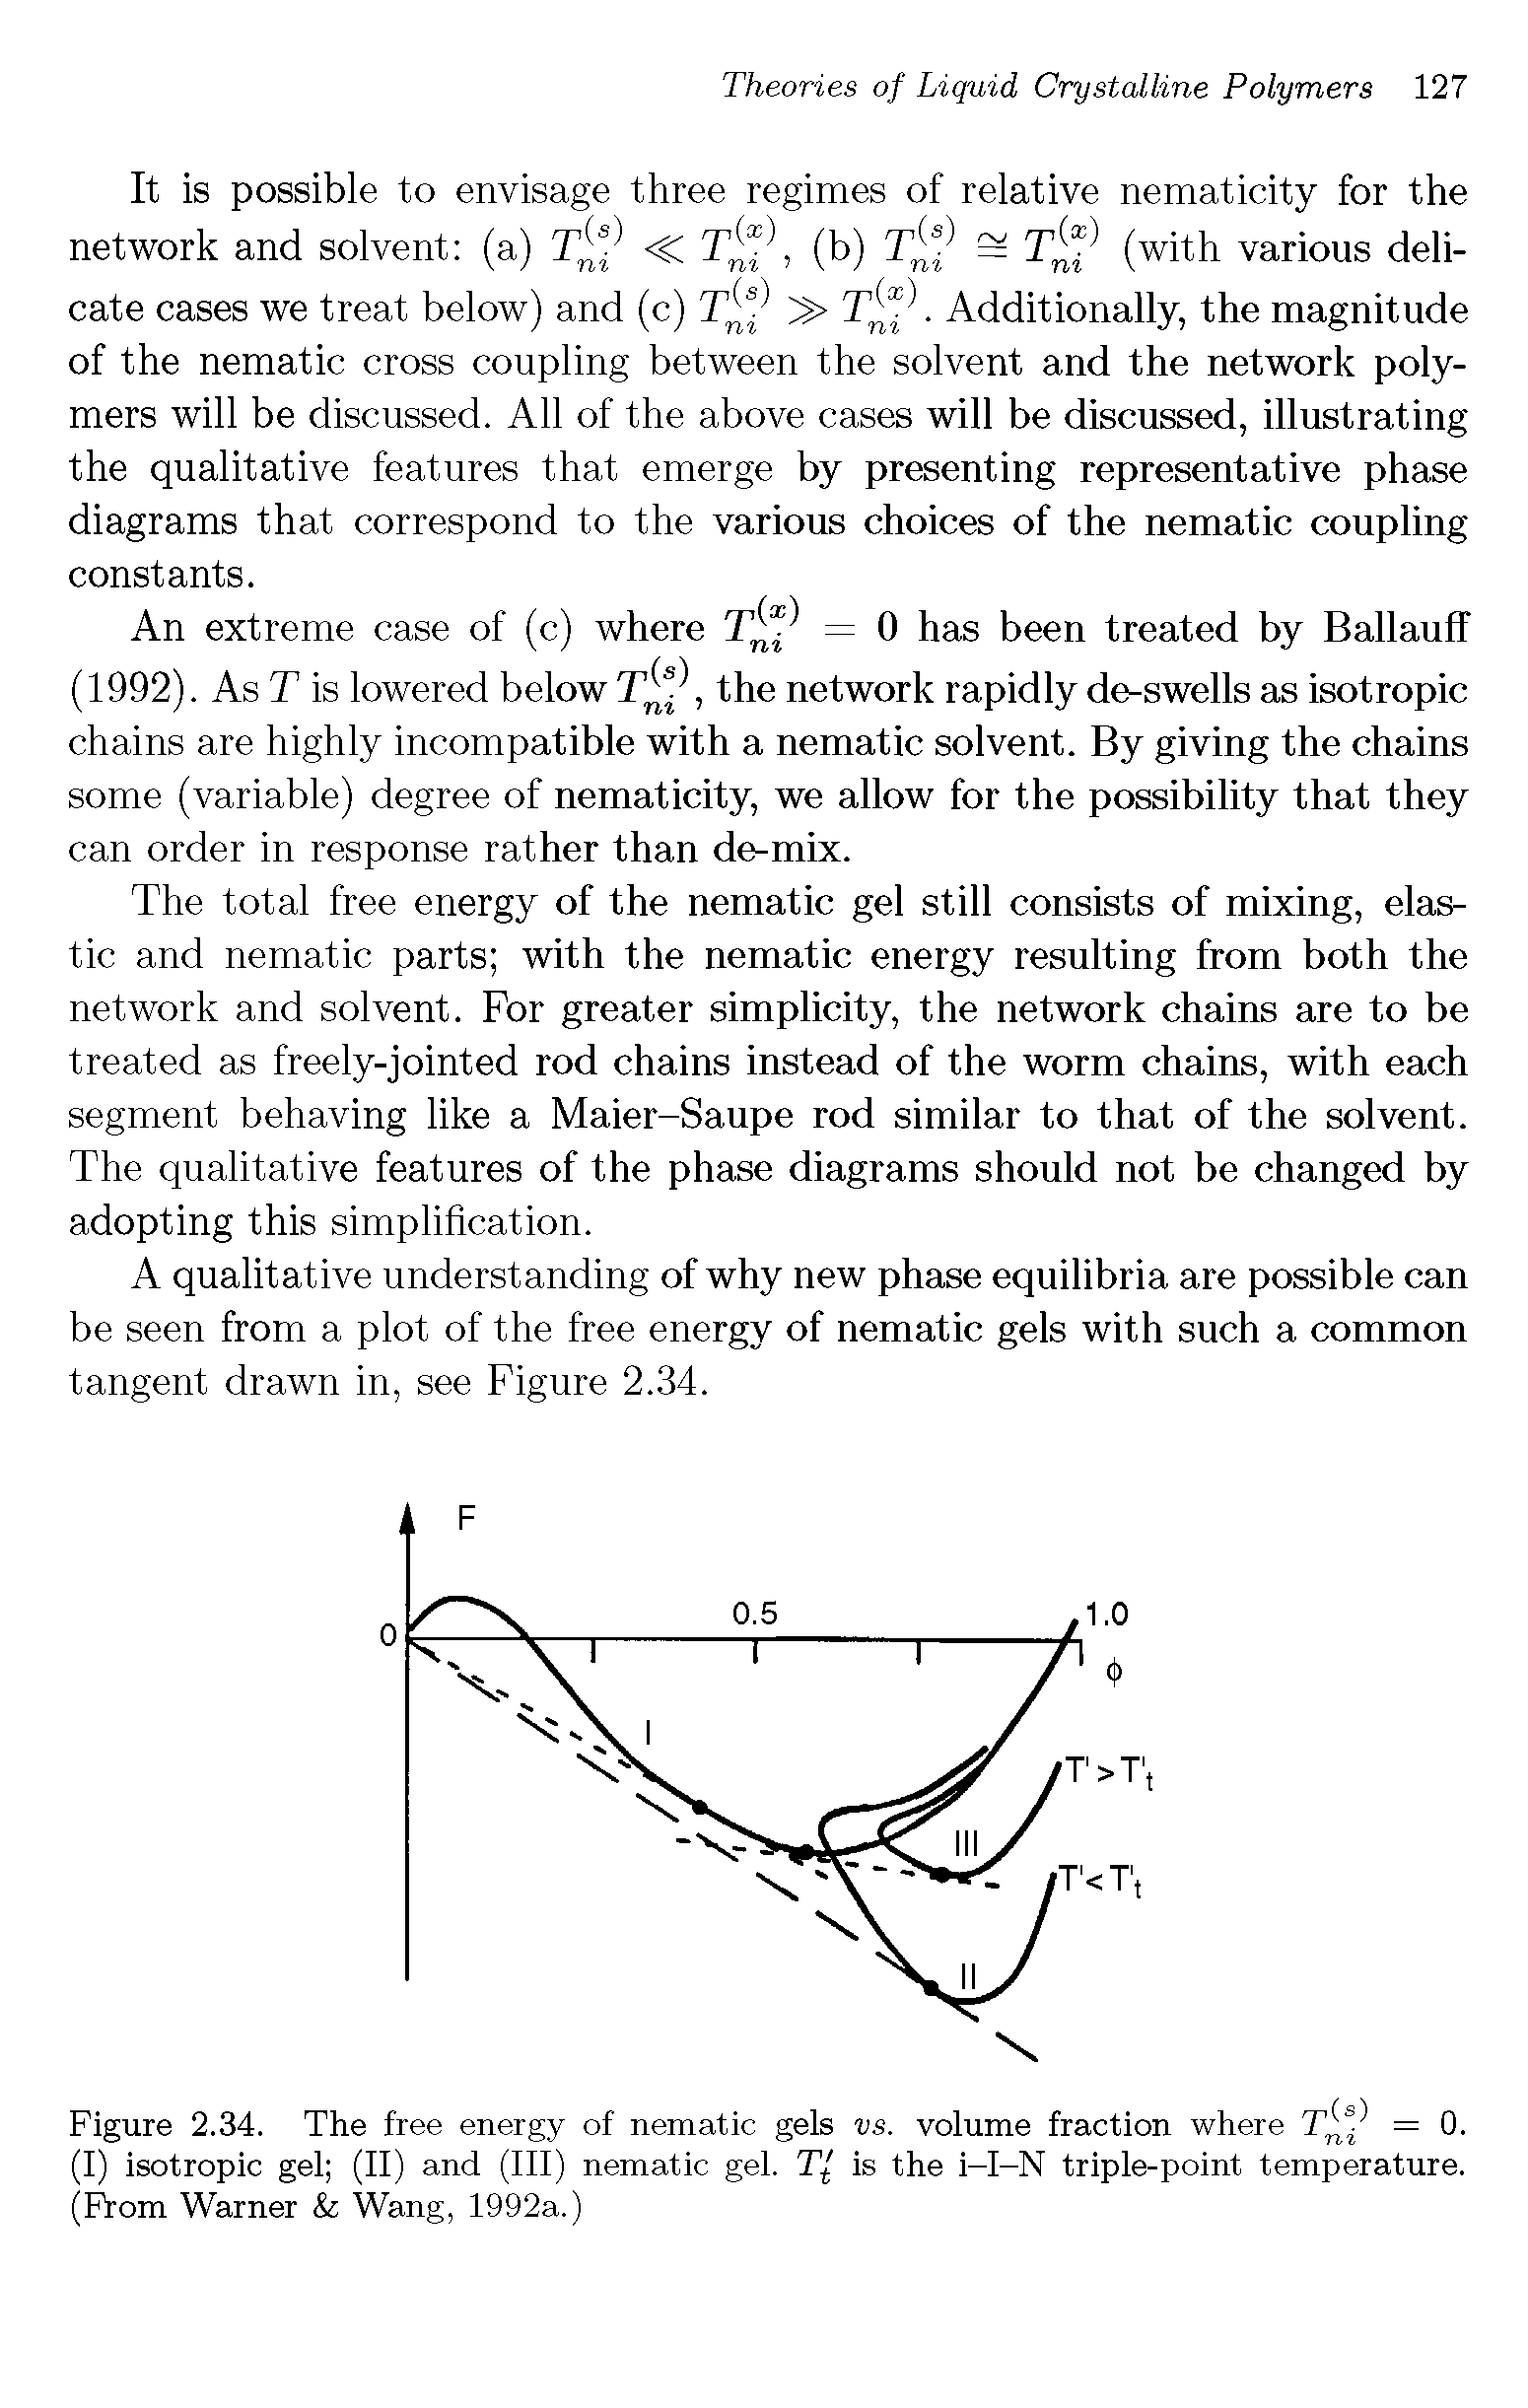 Figure 2.34. The free energy of nematic gels vs. volume fraction where = 0.